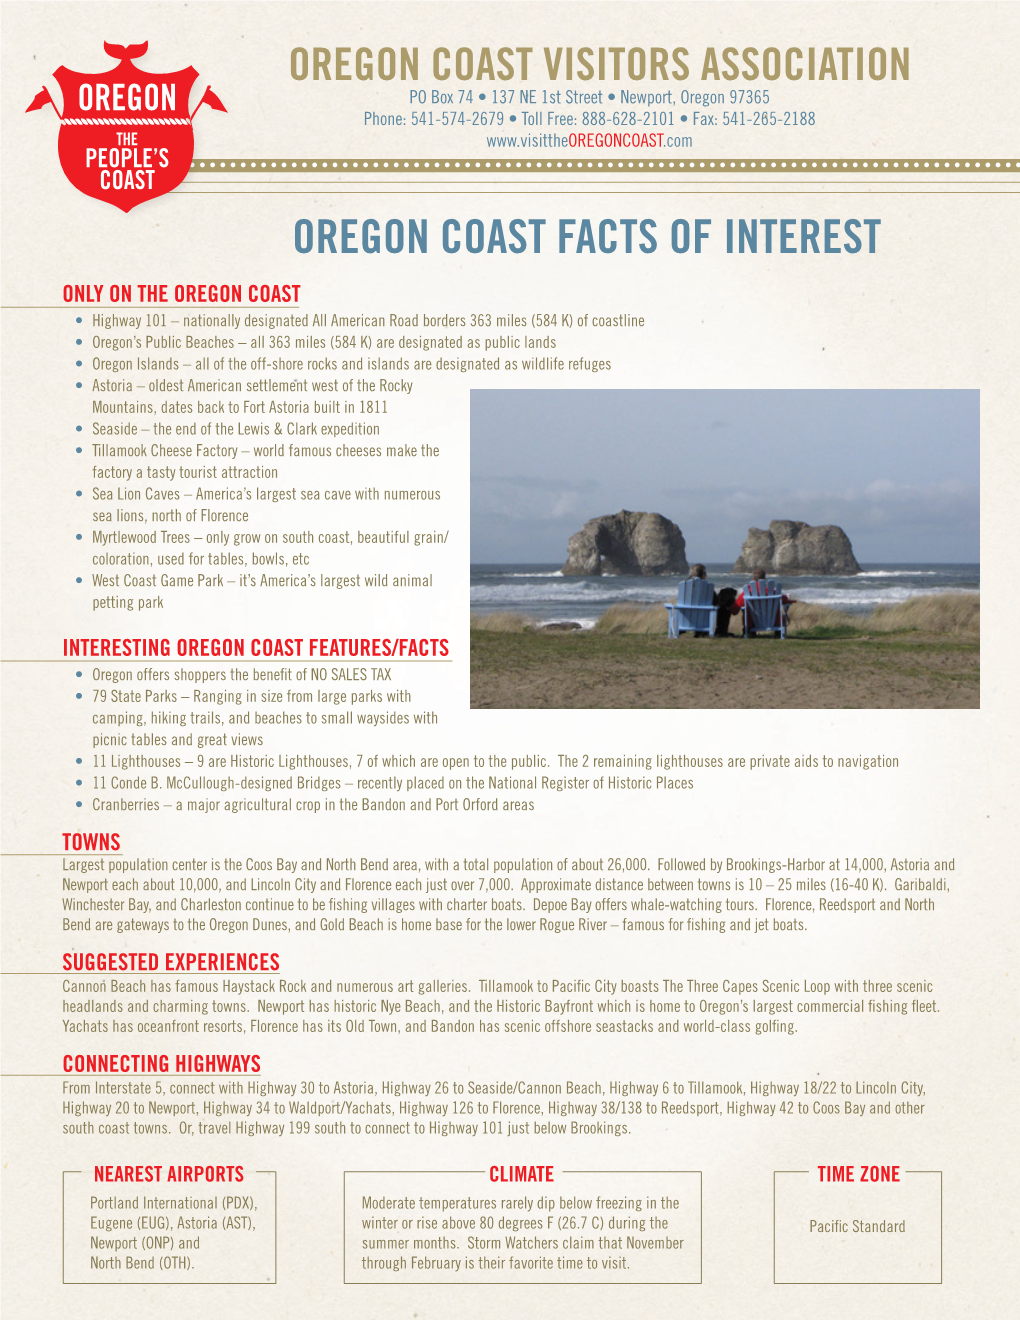 Oregon Coast Facts of Interest